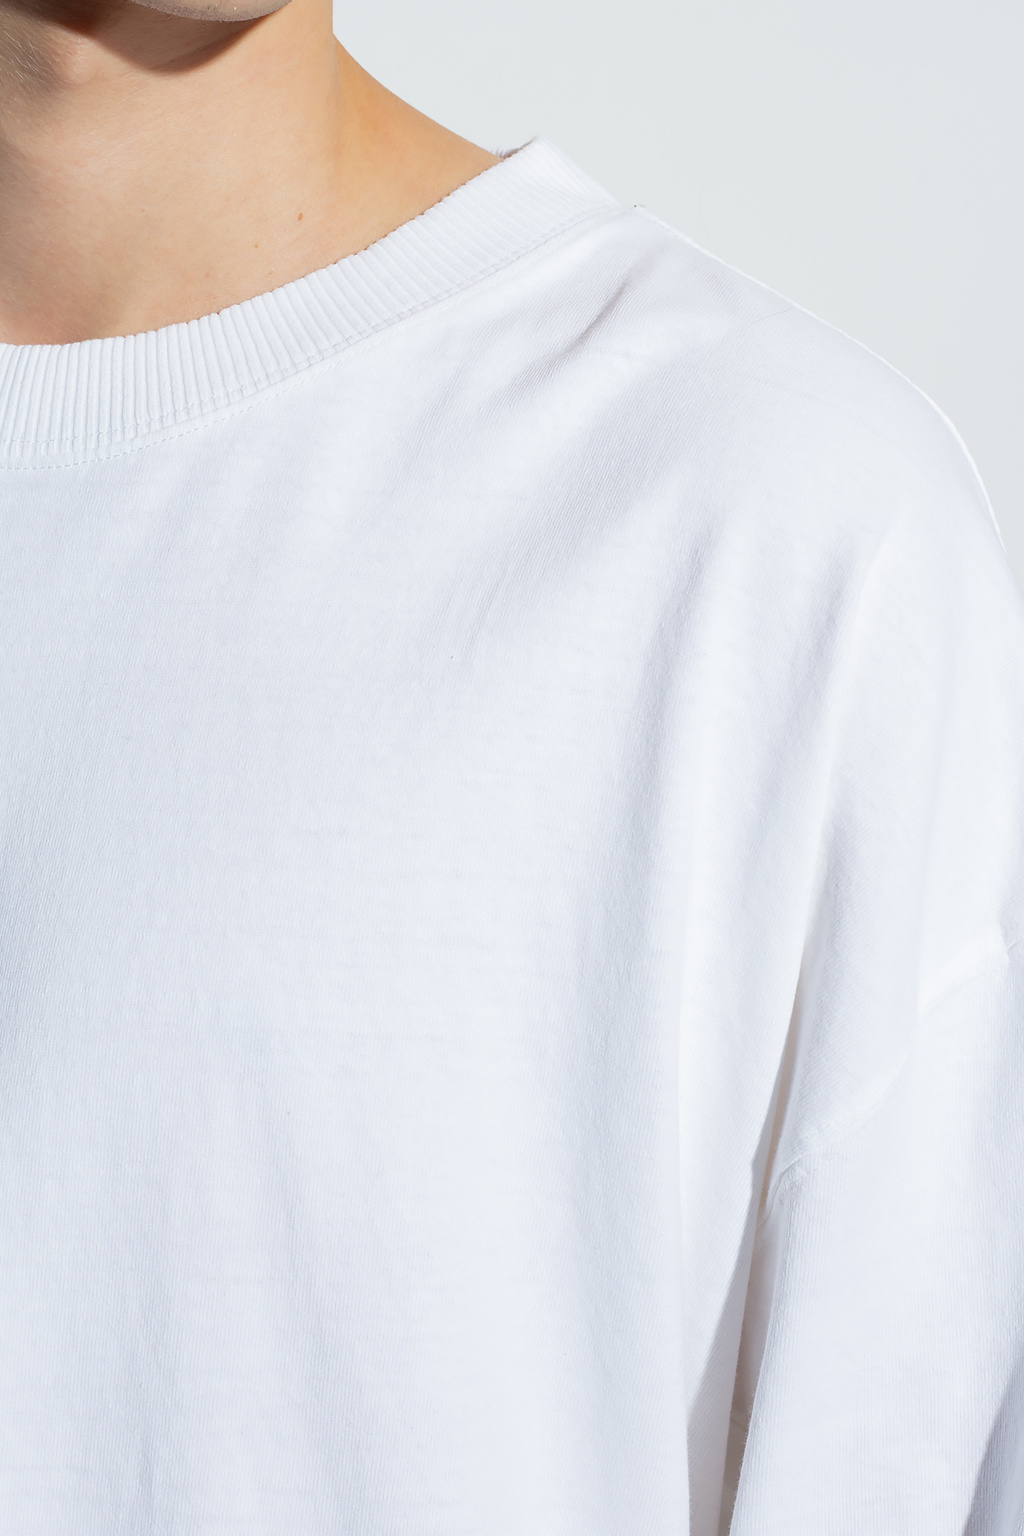 AllSaints ‘Kyan’ T-shirt with long sleeves